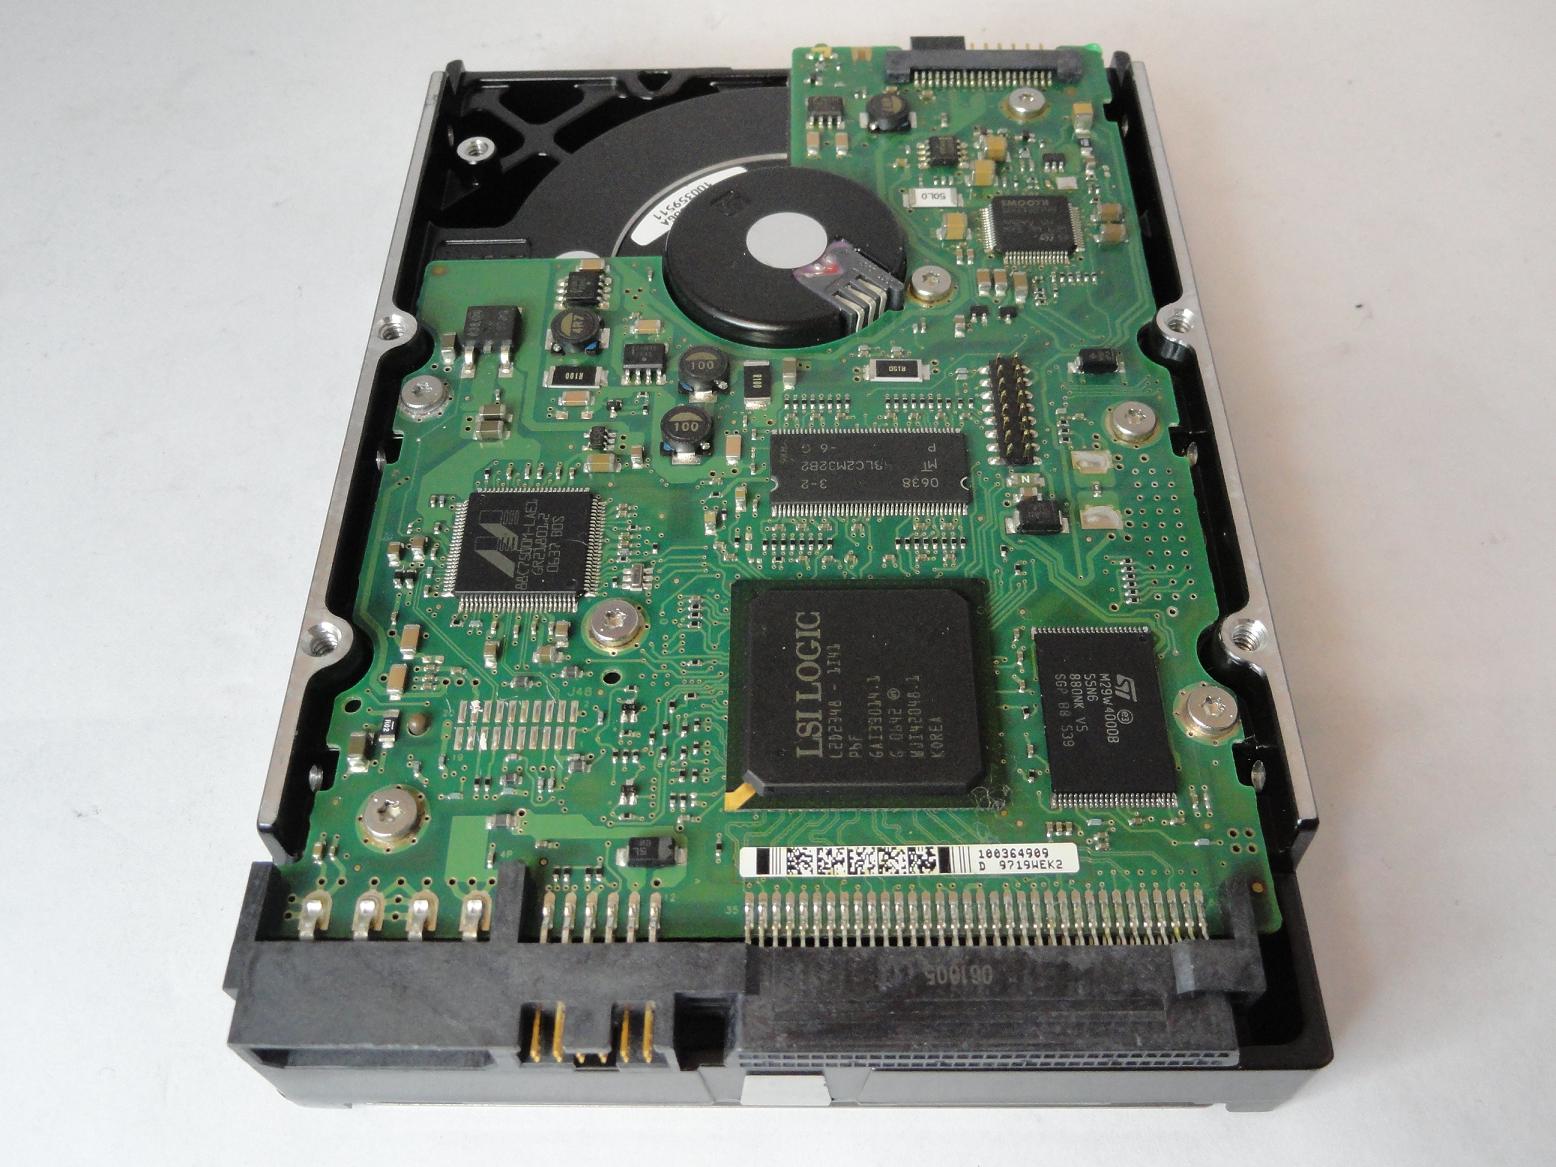 PR03470_9X6005-003_Seagate 36GB SCSI 68 Pin 15Krpm 3.5in HDD - Image2